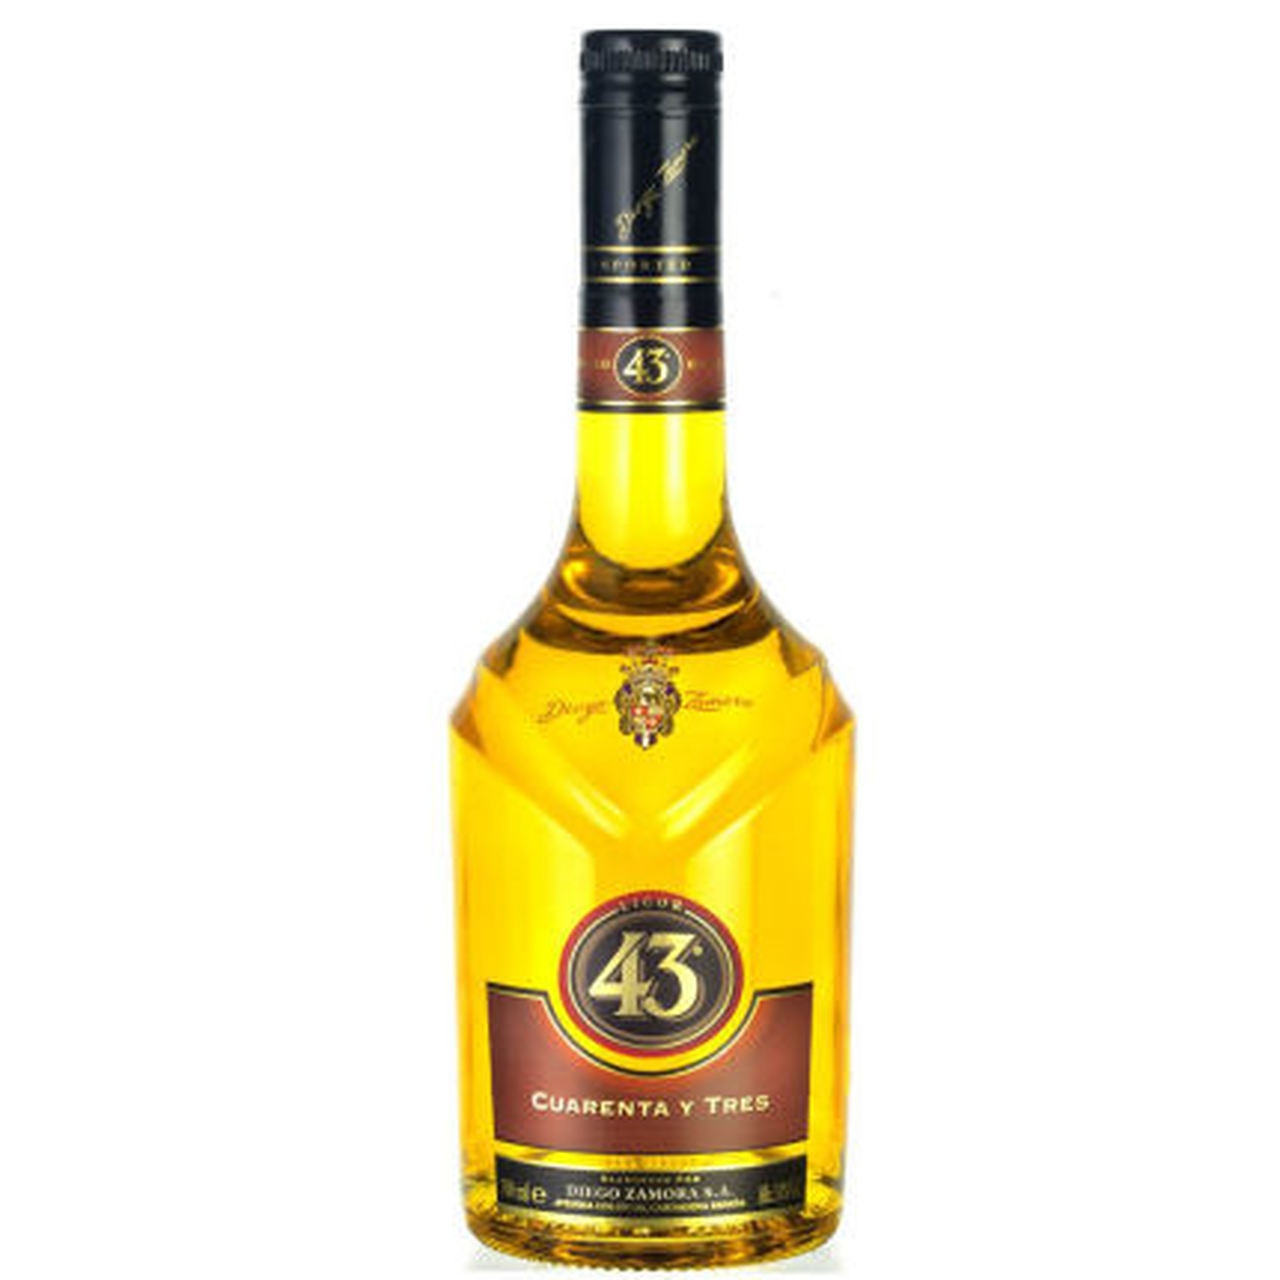 “43” (375 Room Falls y Licor – The Wine Cuarenta Tres ml)